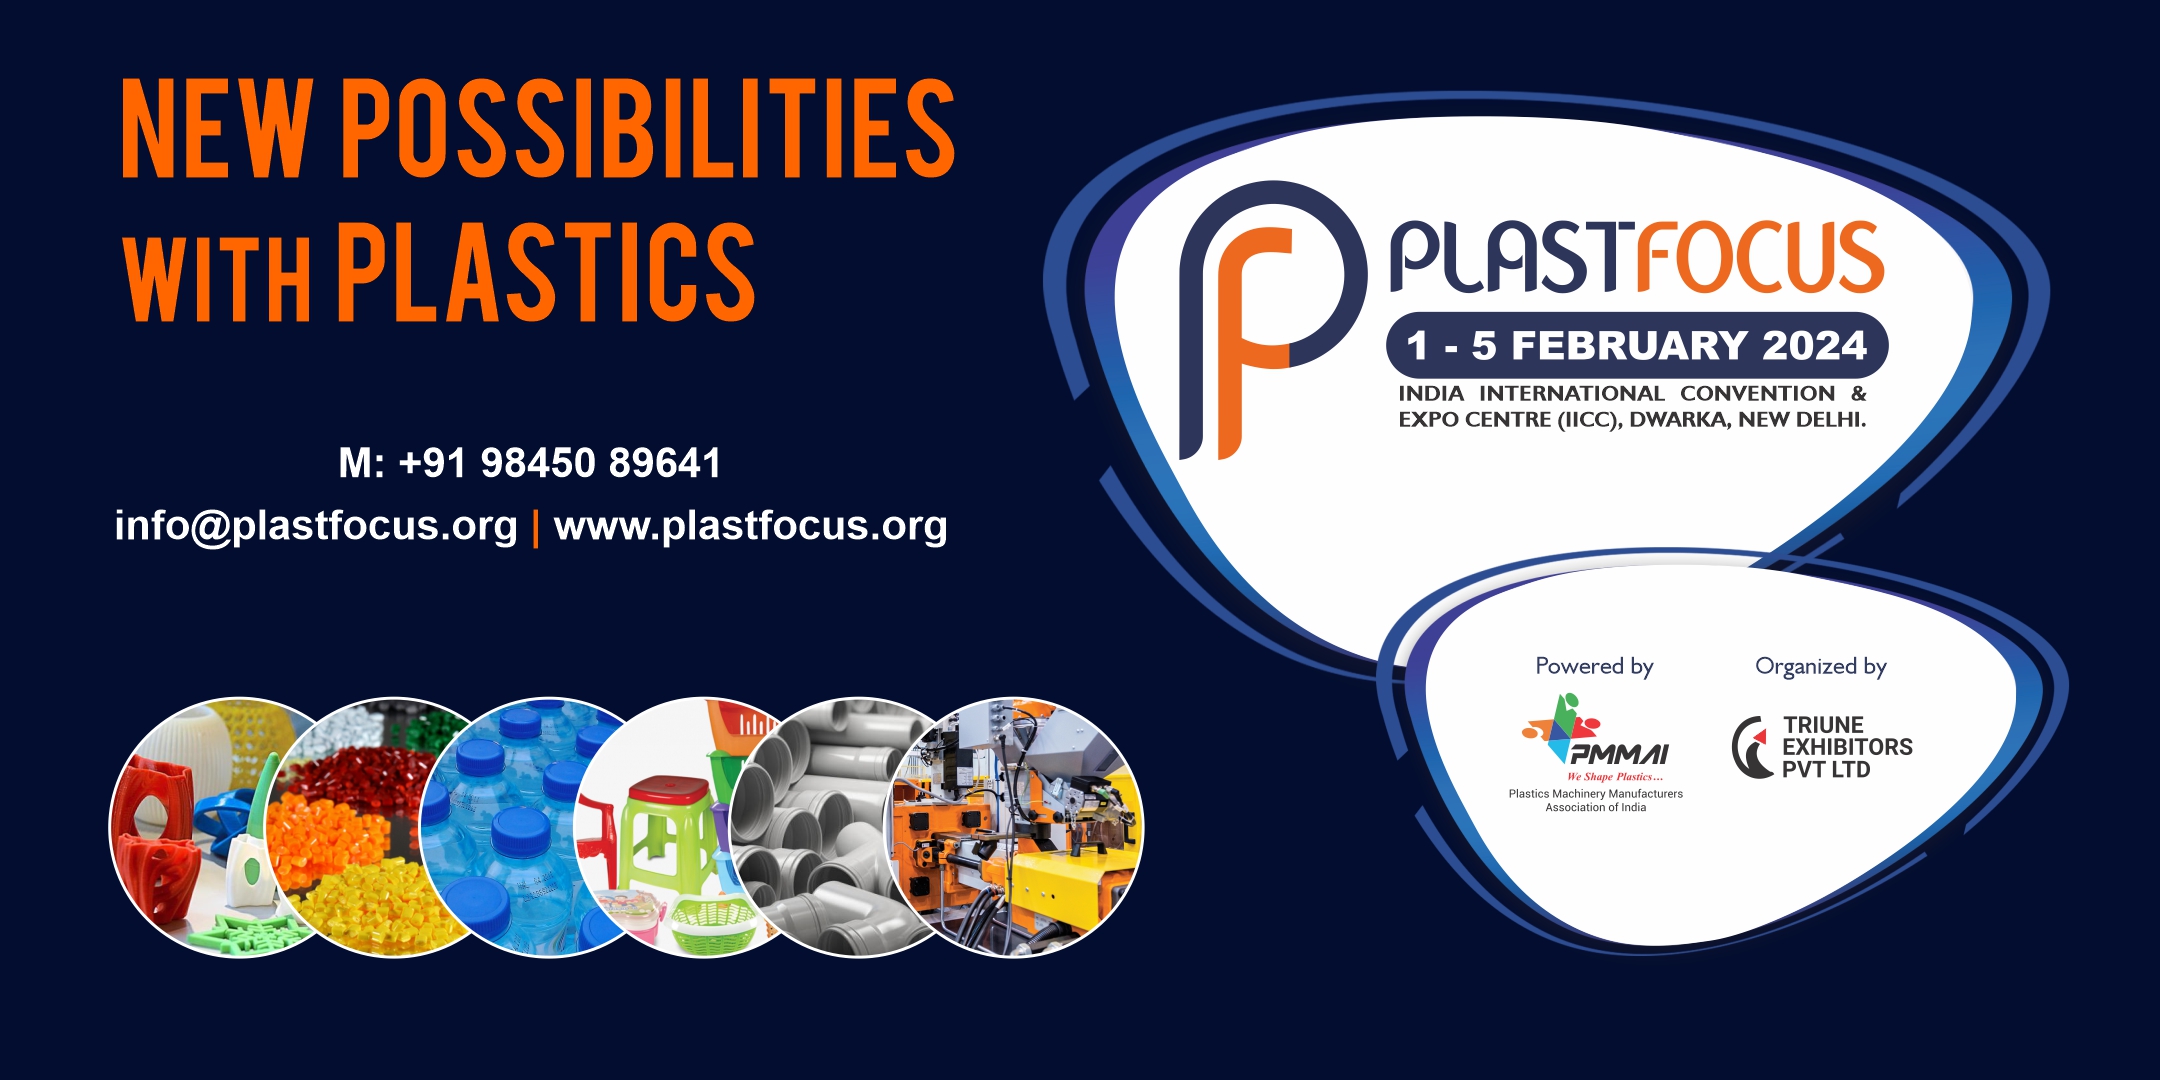 Plastfocus-2024 Exhibition, New Delhi, Delhi, India